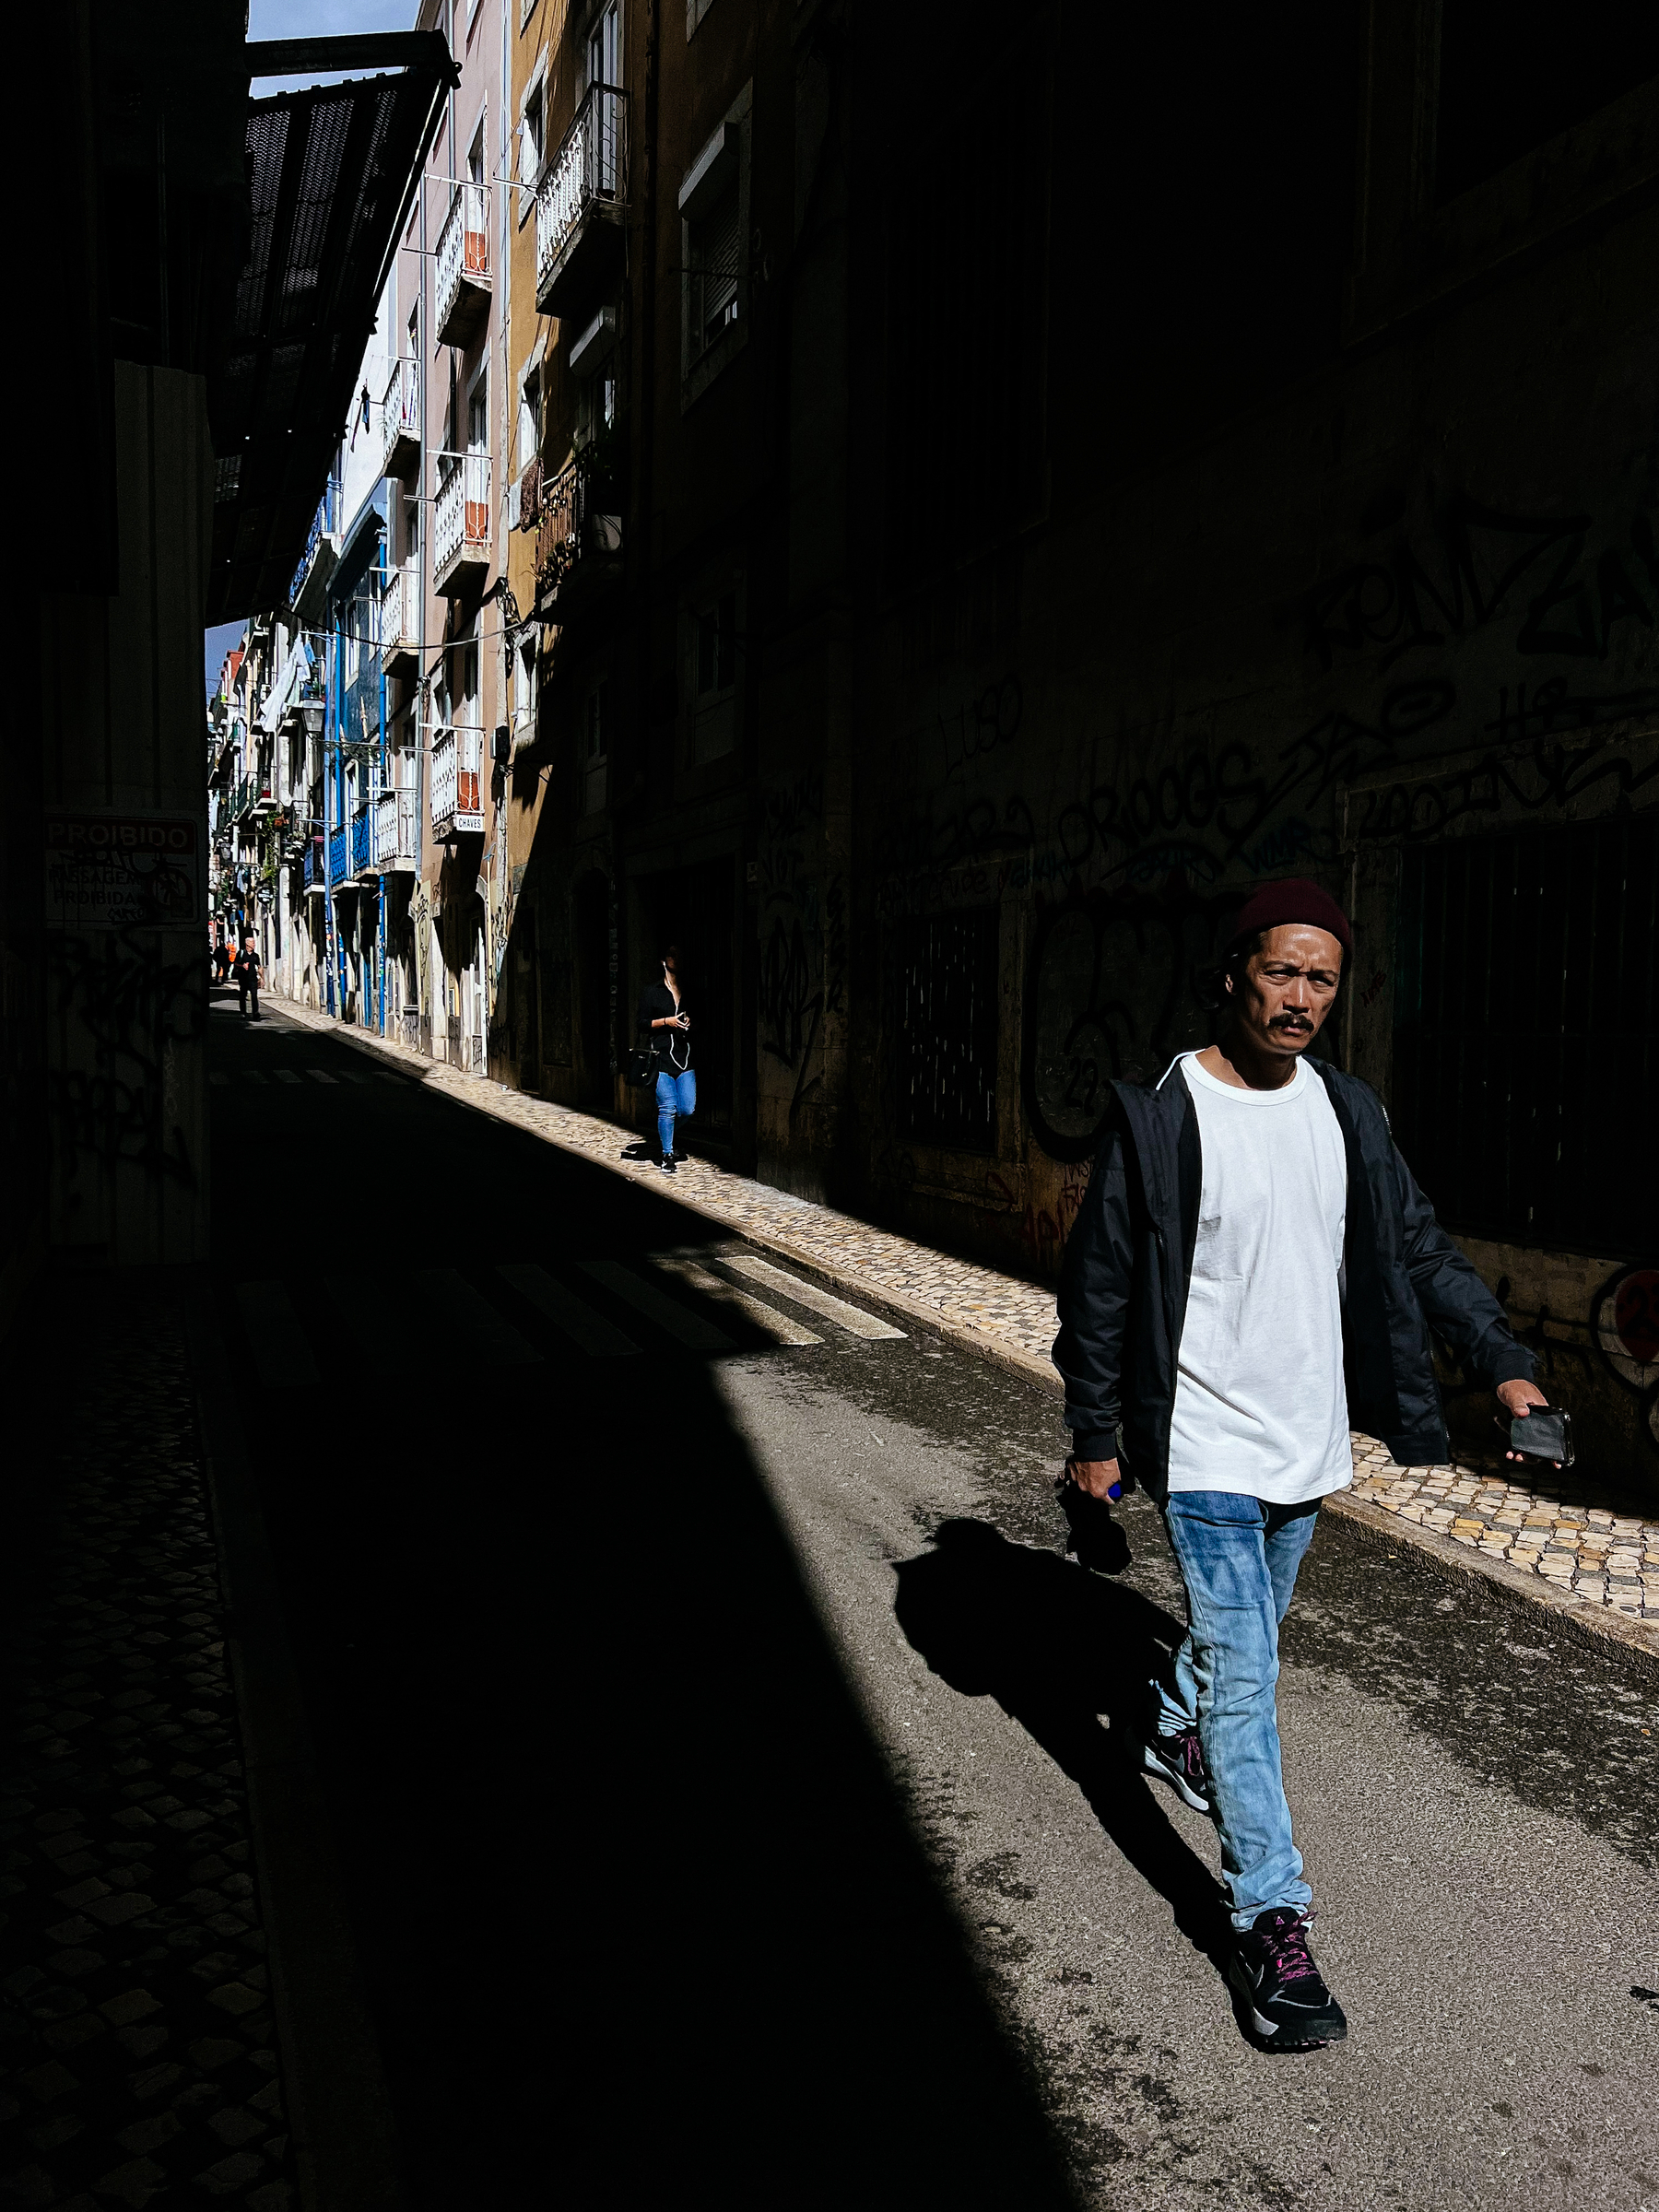 A man walks by, on a dramatically shaded narrow street.